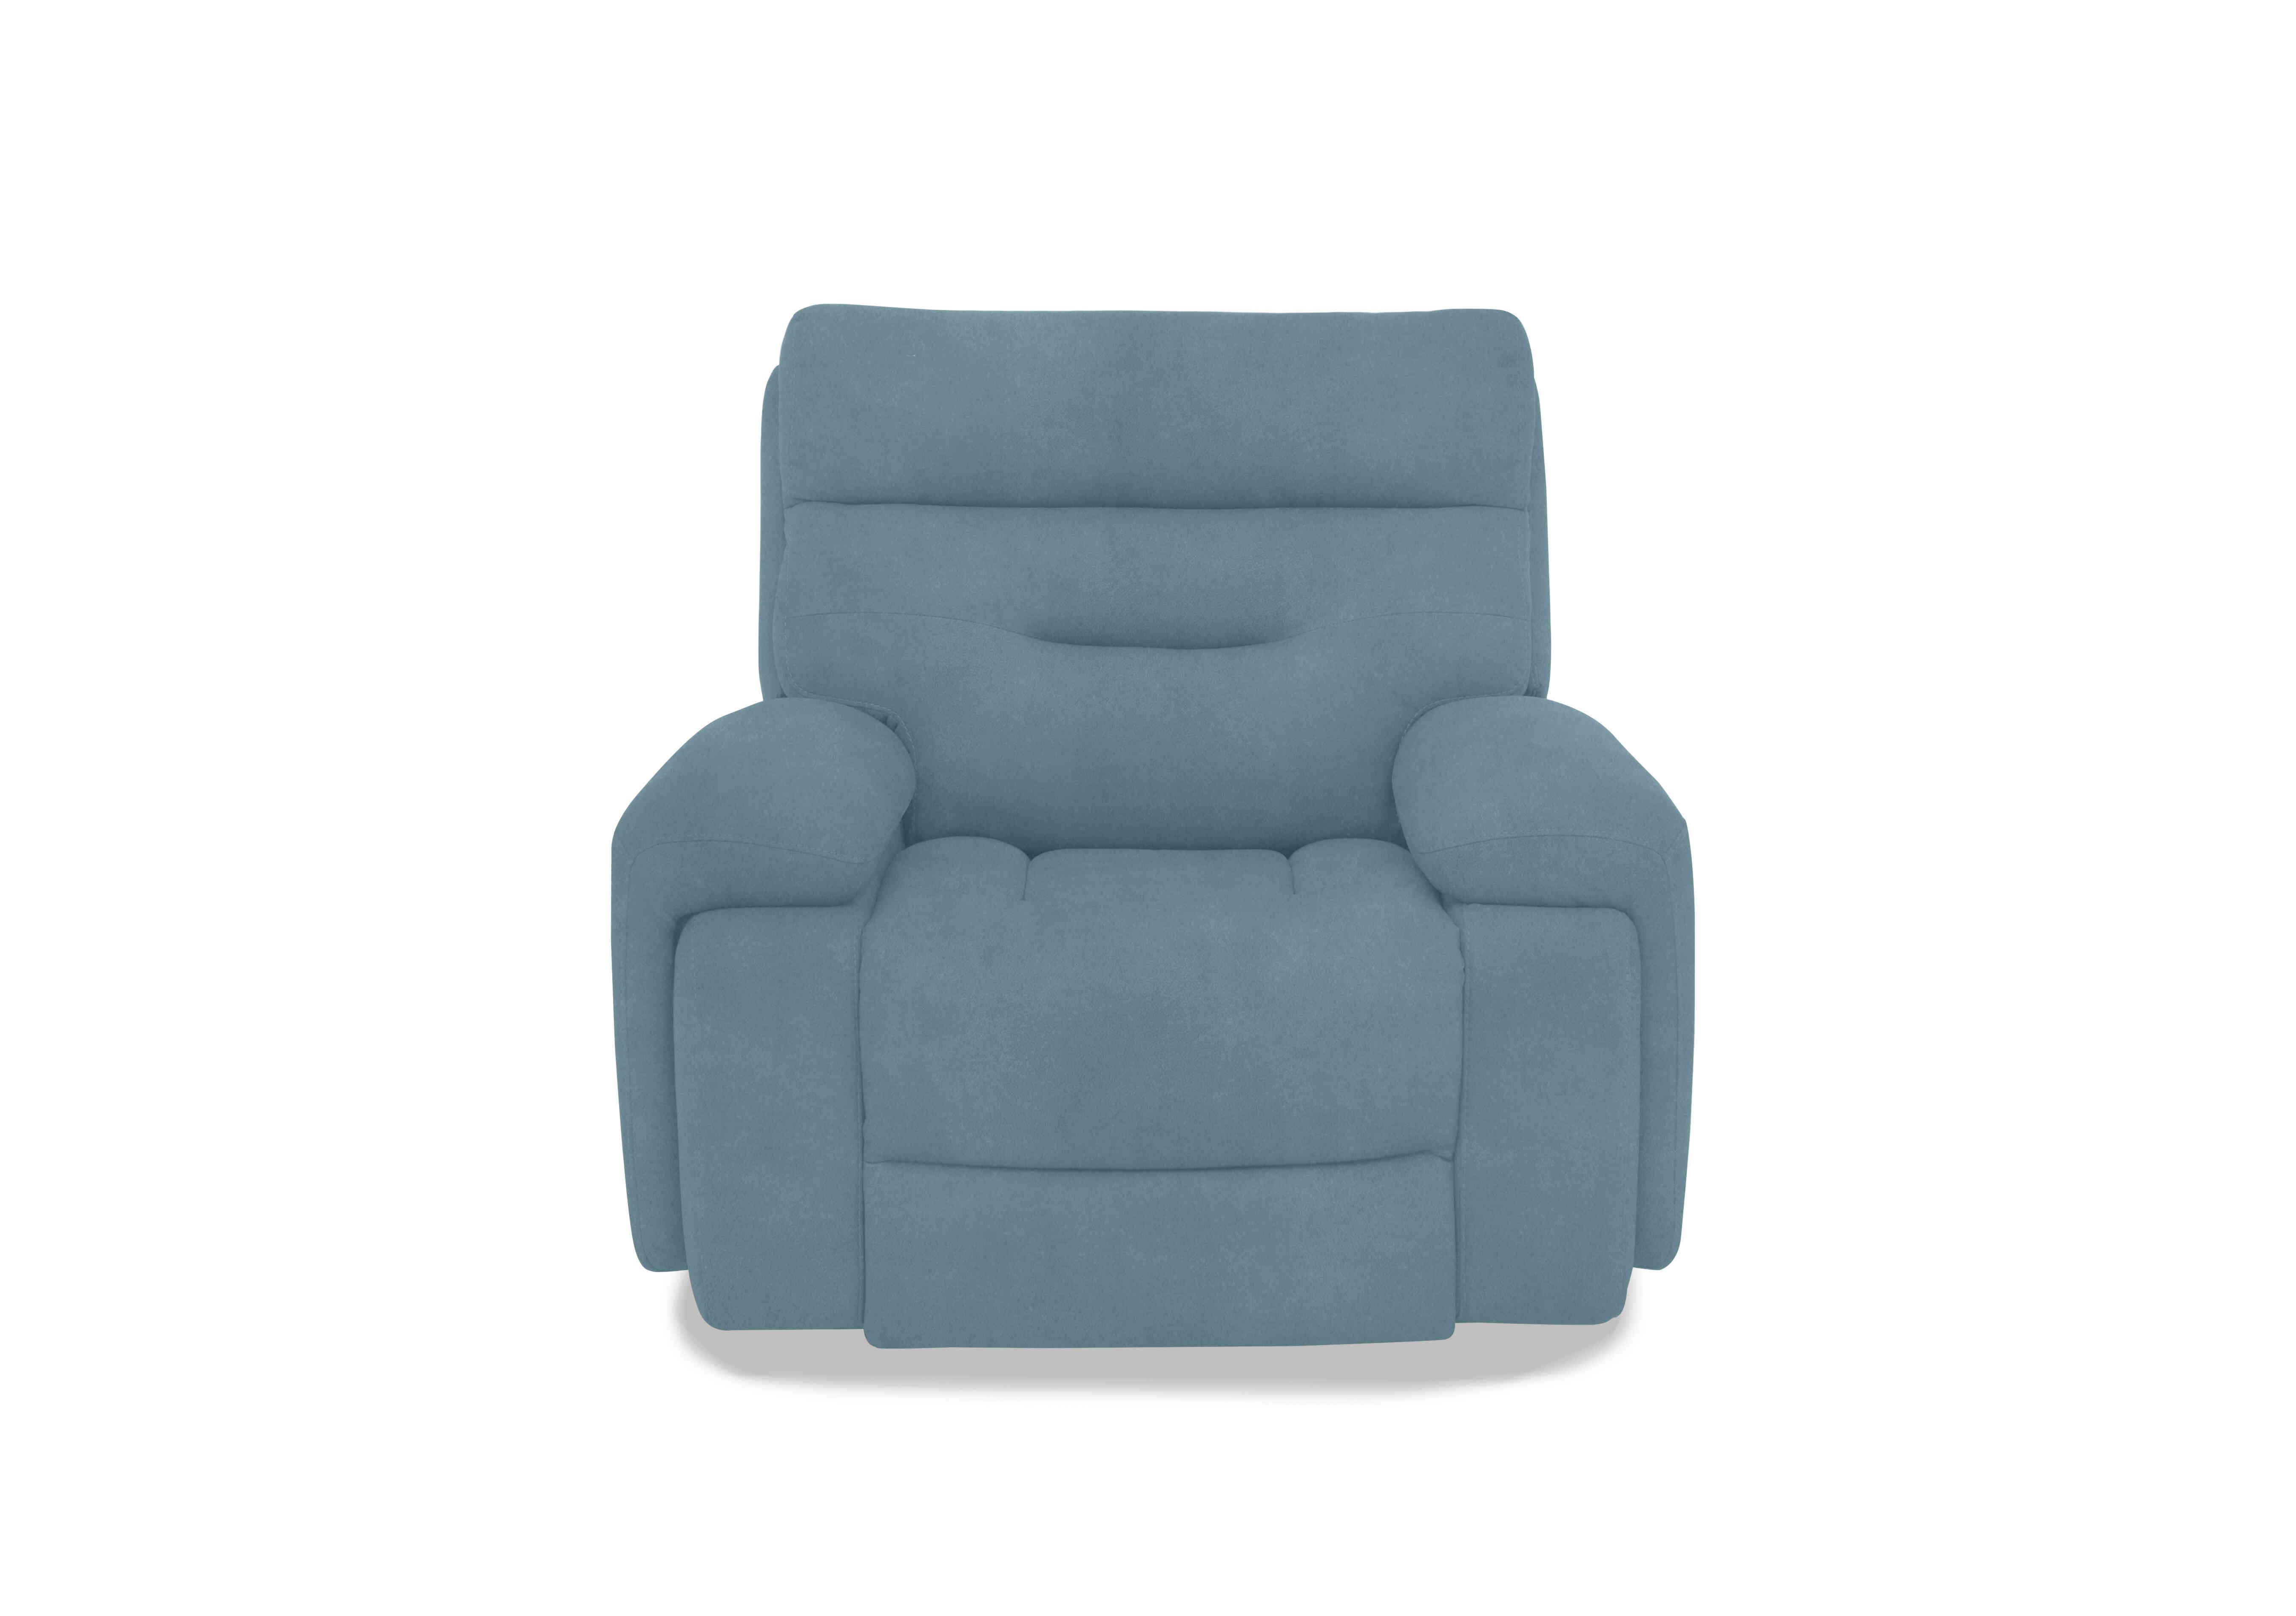 Cinemax Media Fabric Power Recliner Chair with Power Headrest in Vv-0312 Velvet Blu on Furniture Village